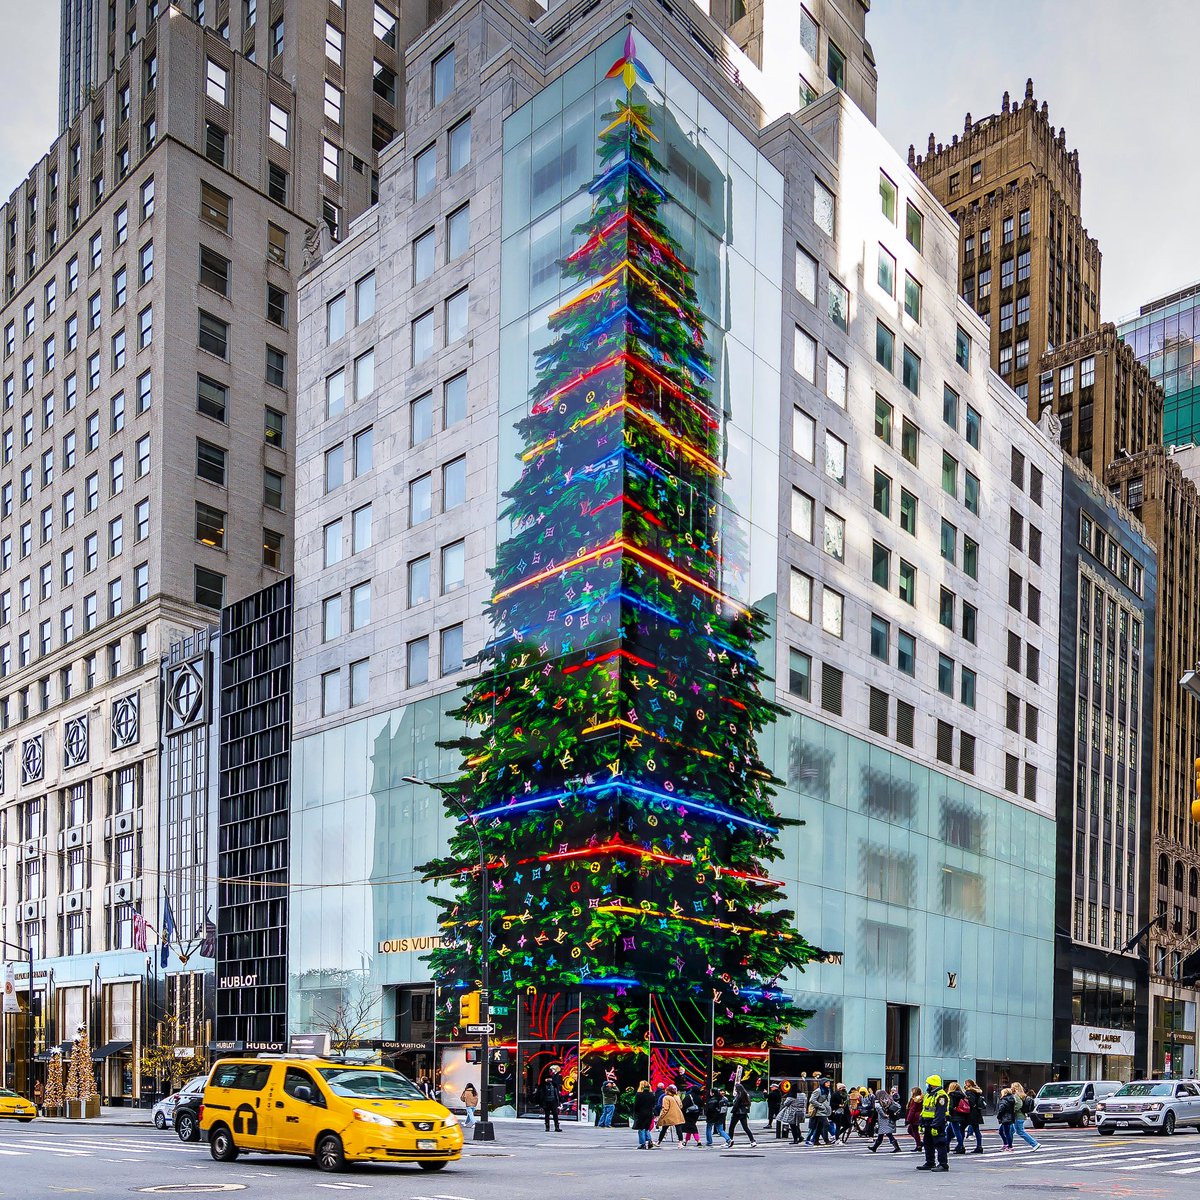 Sofitel New York Makes A “Christmas Tree” From Louis Vuitton